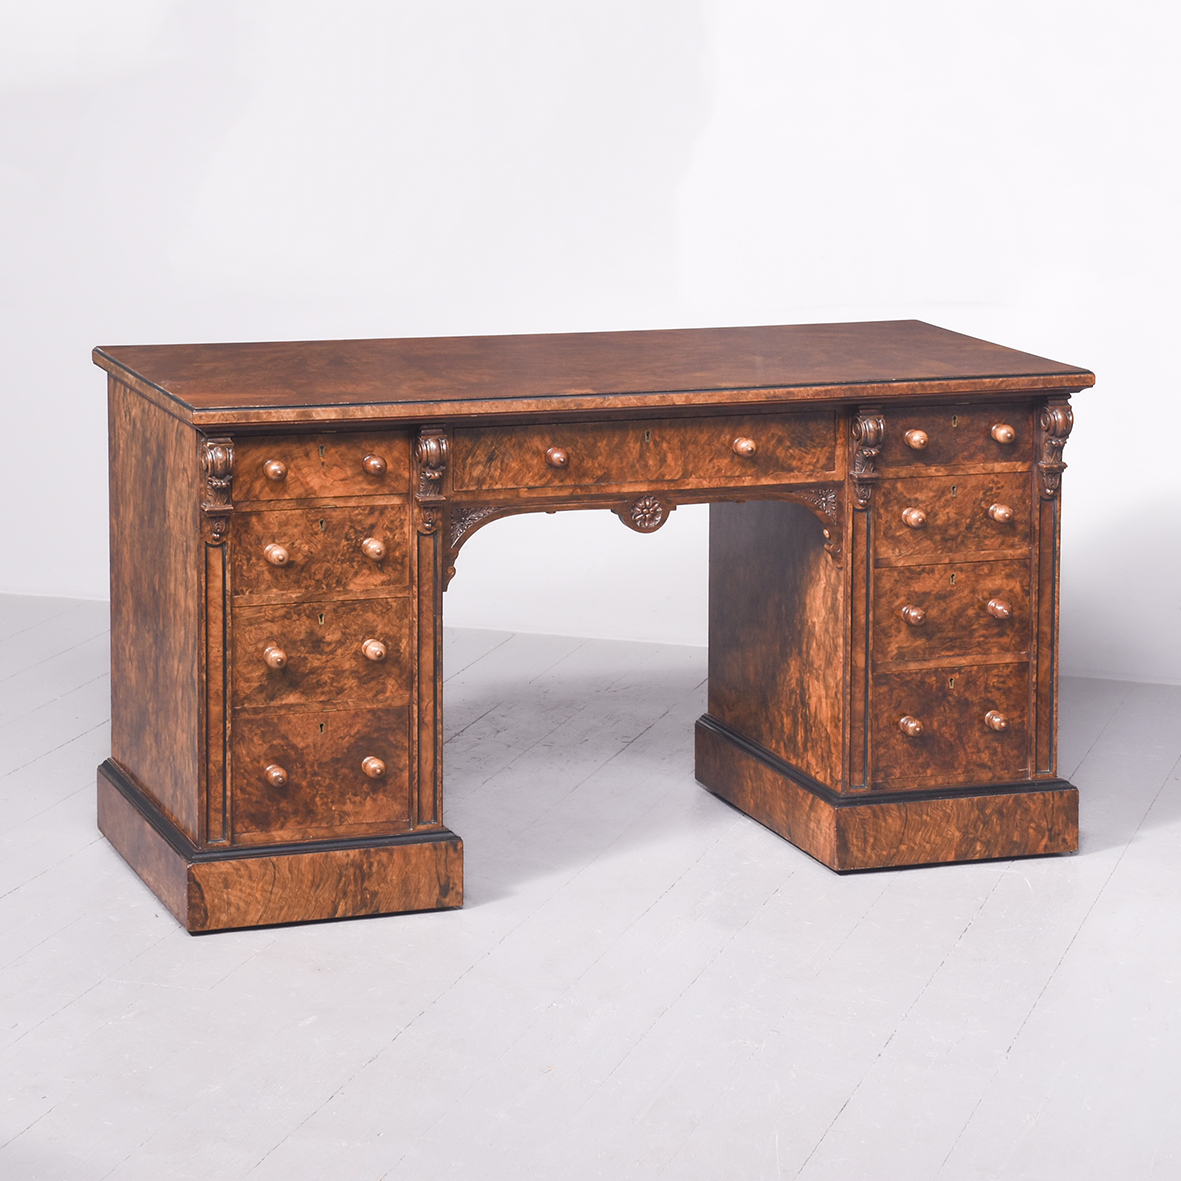 Exceptional Quality Burr Walnut Victorian Kneehole Desk A Victorian burr walnut kneehole desk Antique Desks